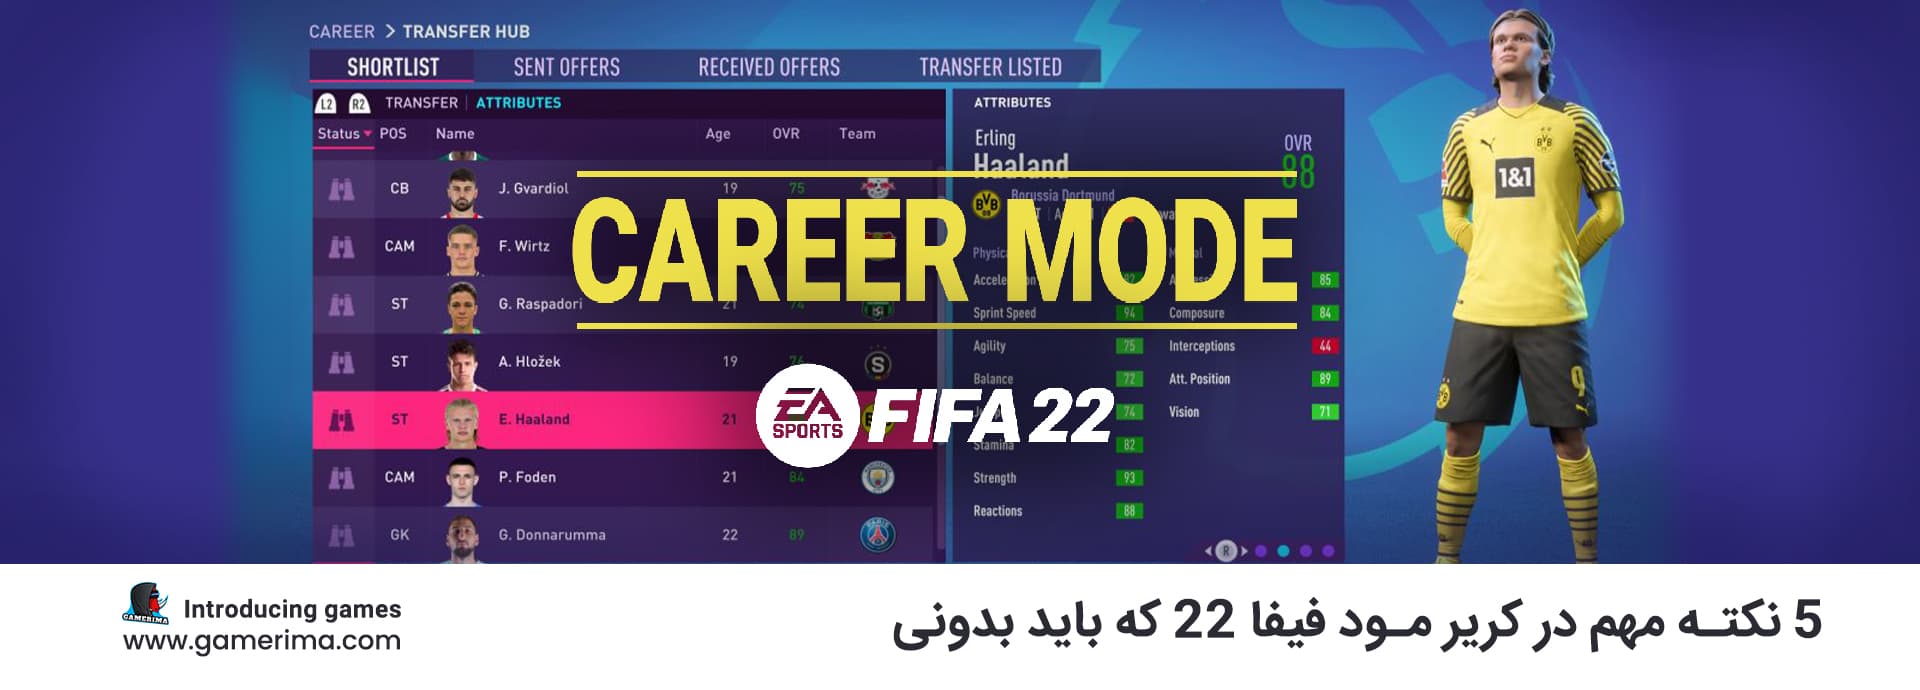 5 fifa 22 career mode tips